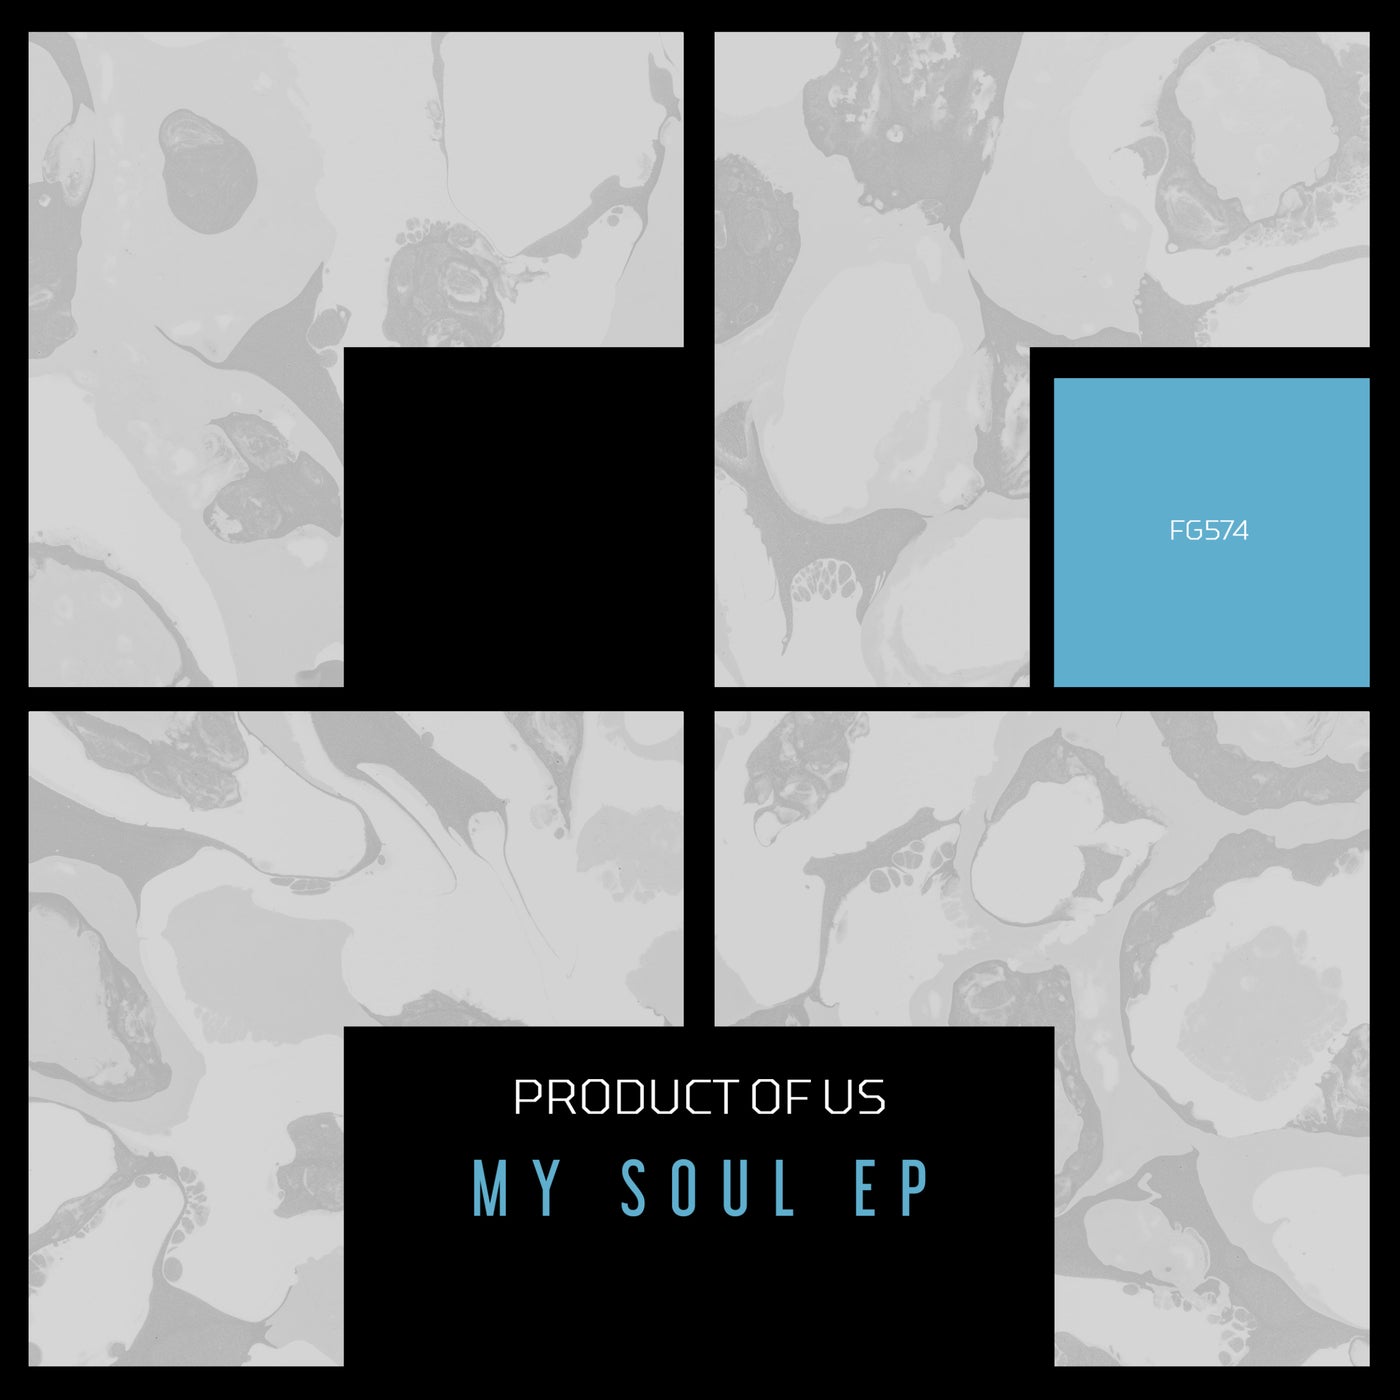 My Soul EP